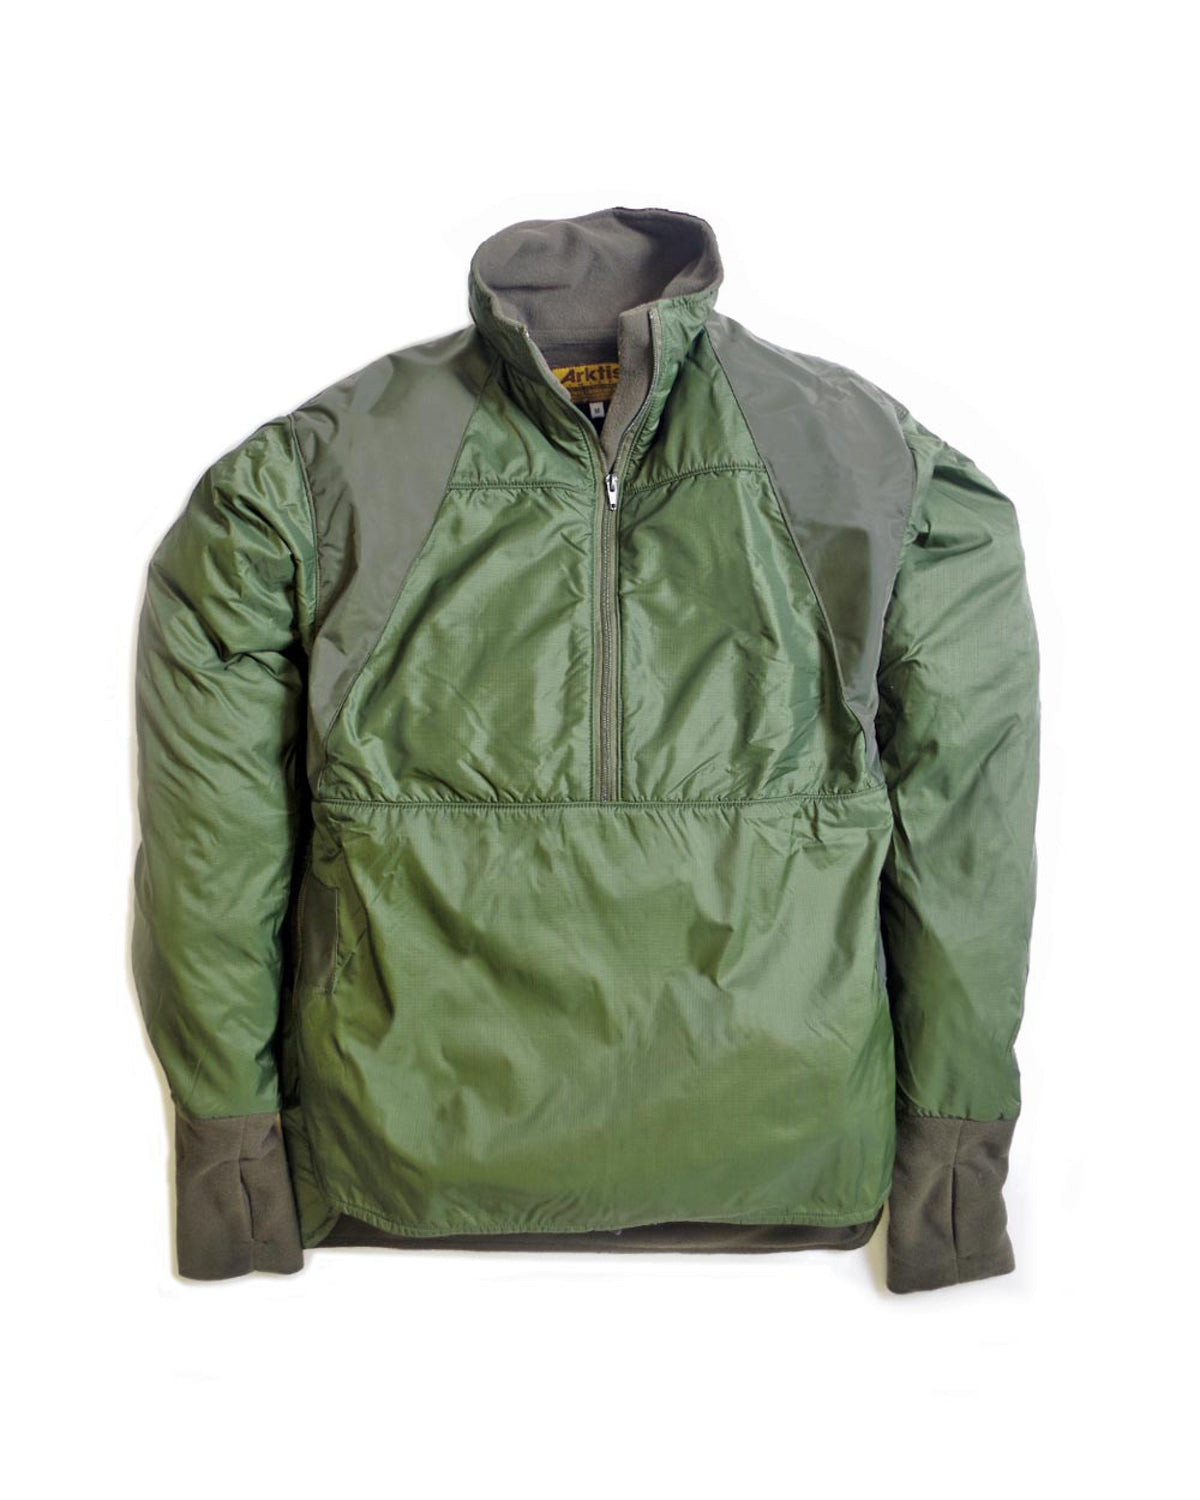 A212 Reinforced SWAT Shirt - Olive Green– Arktis Store